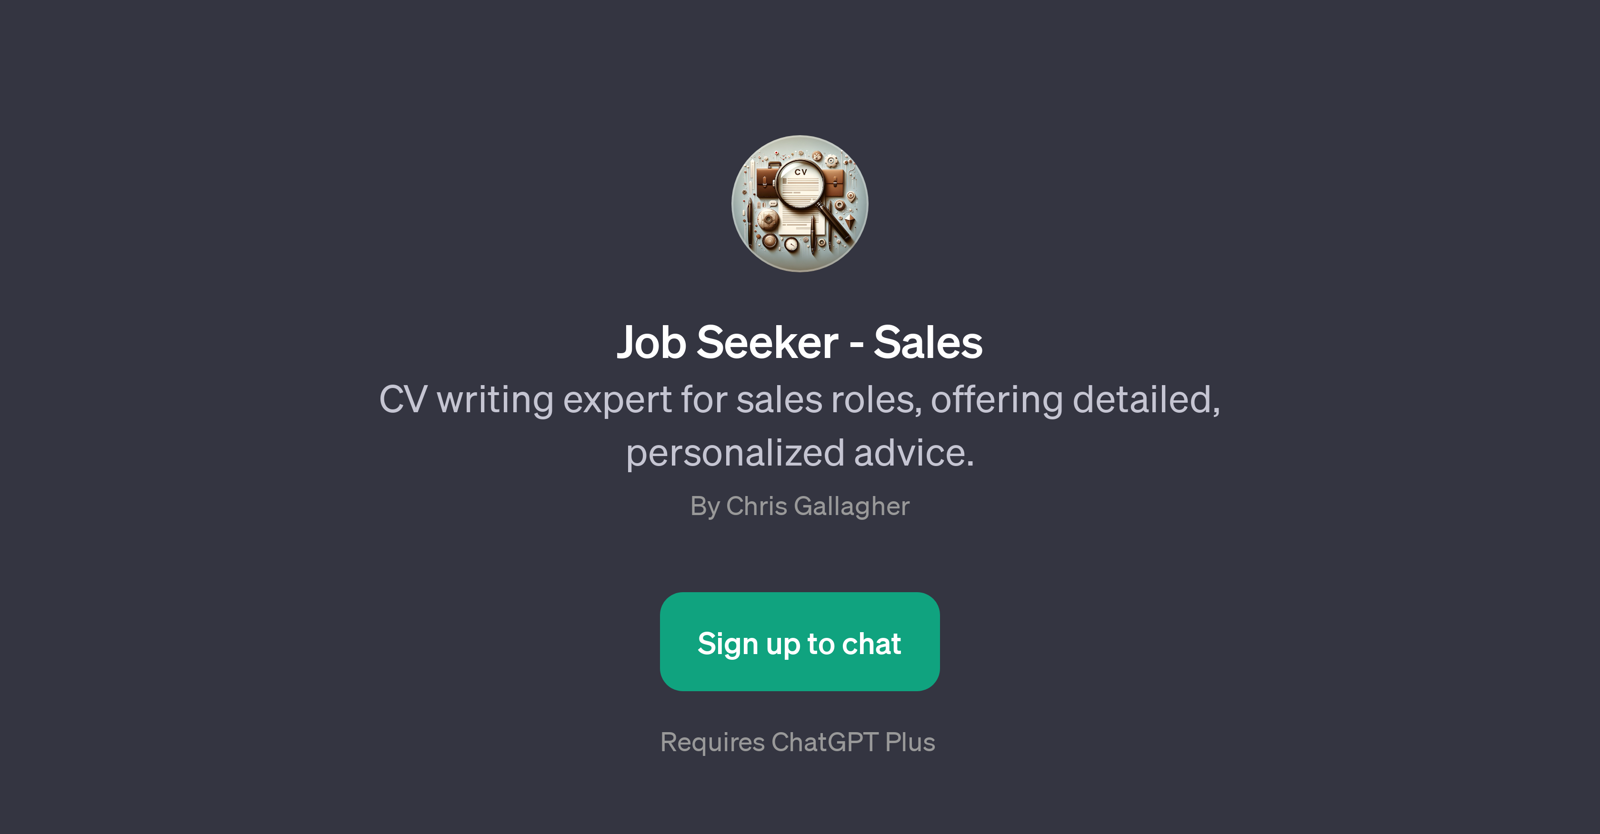 Job Seeker - Sales website